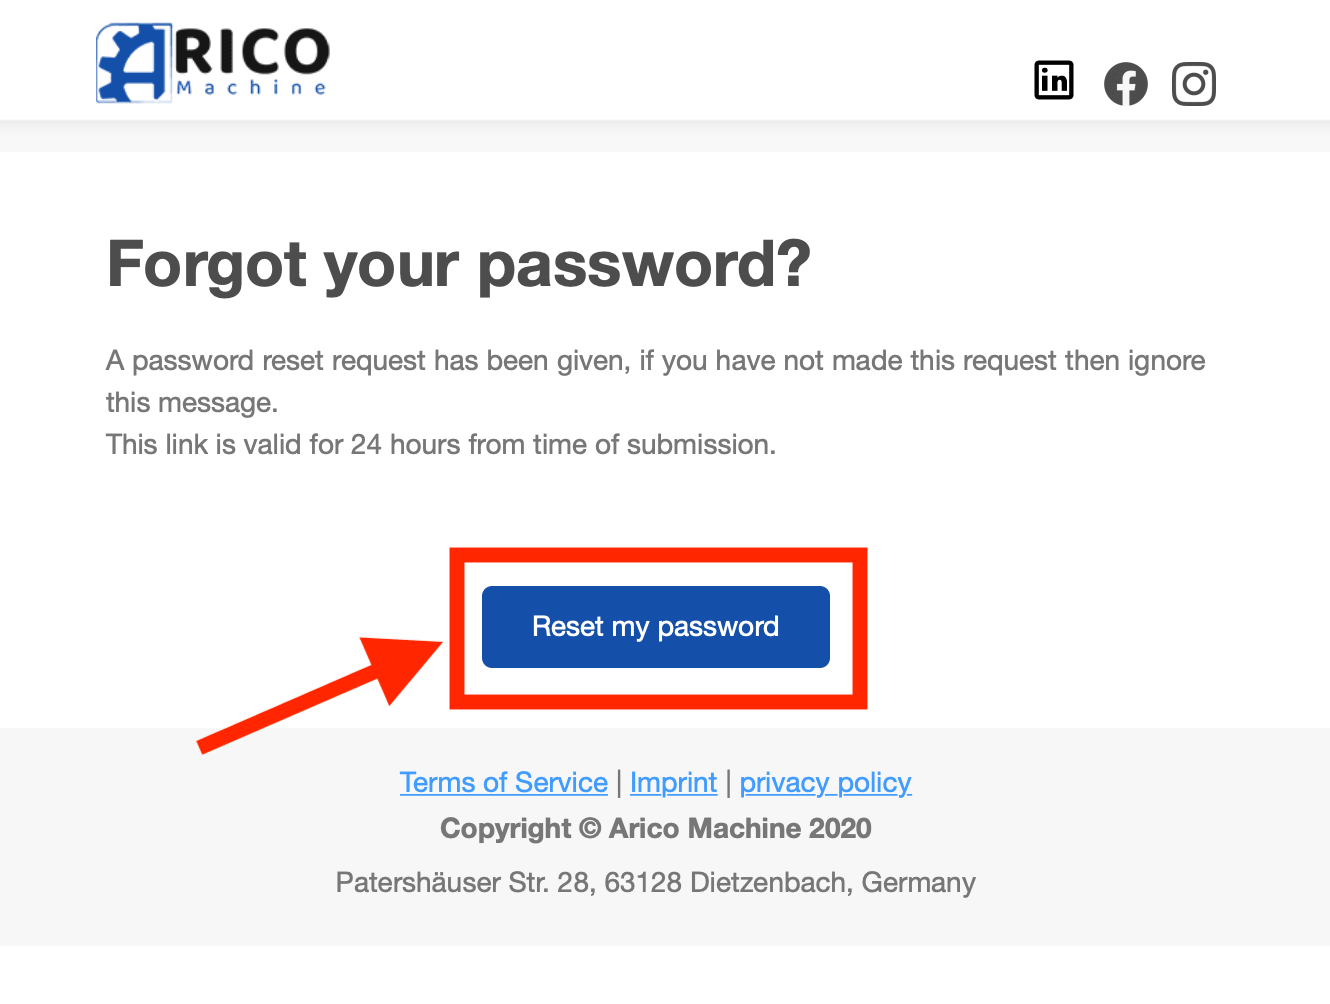 Email - Passwort vergessen